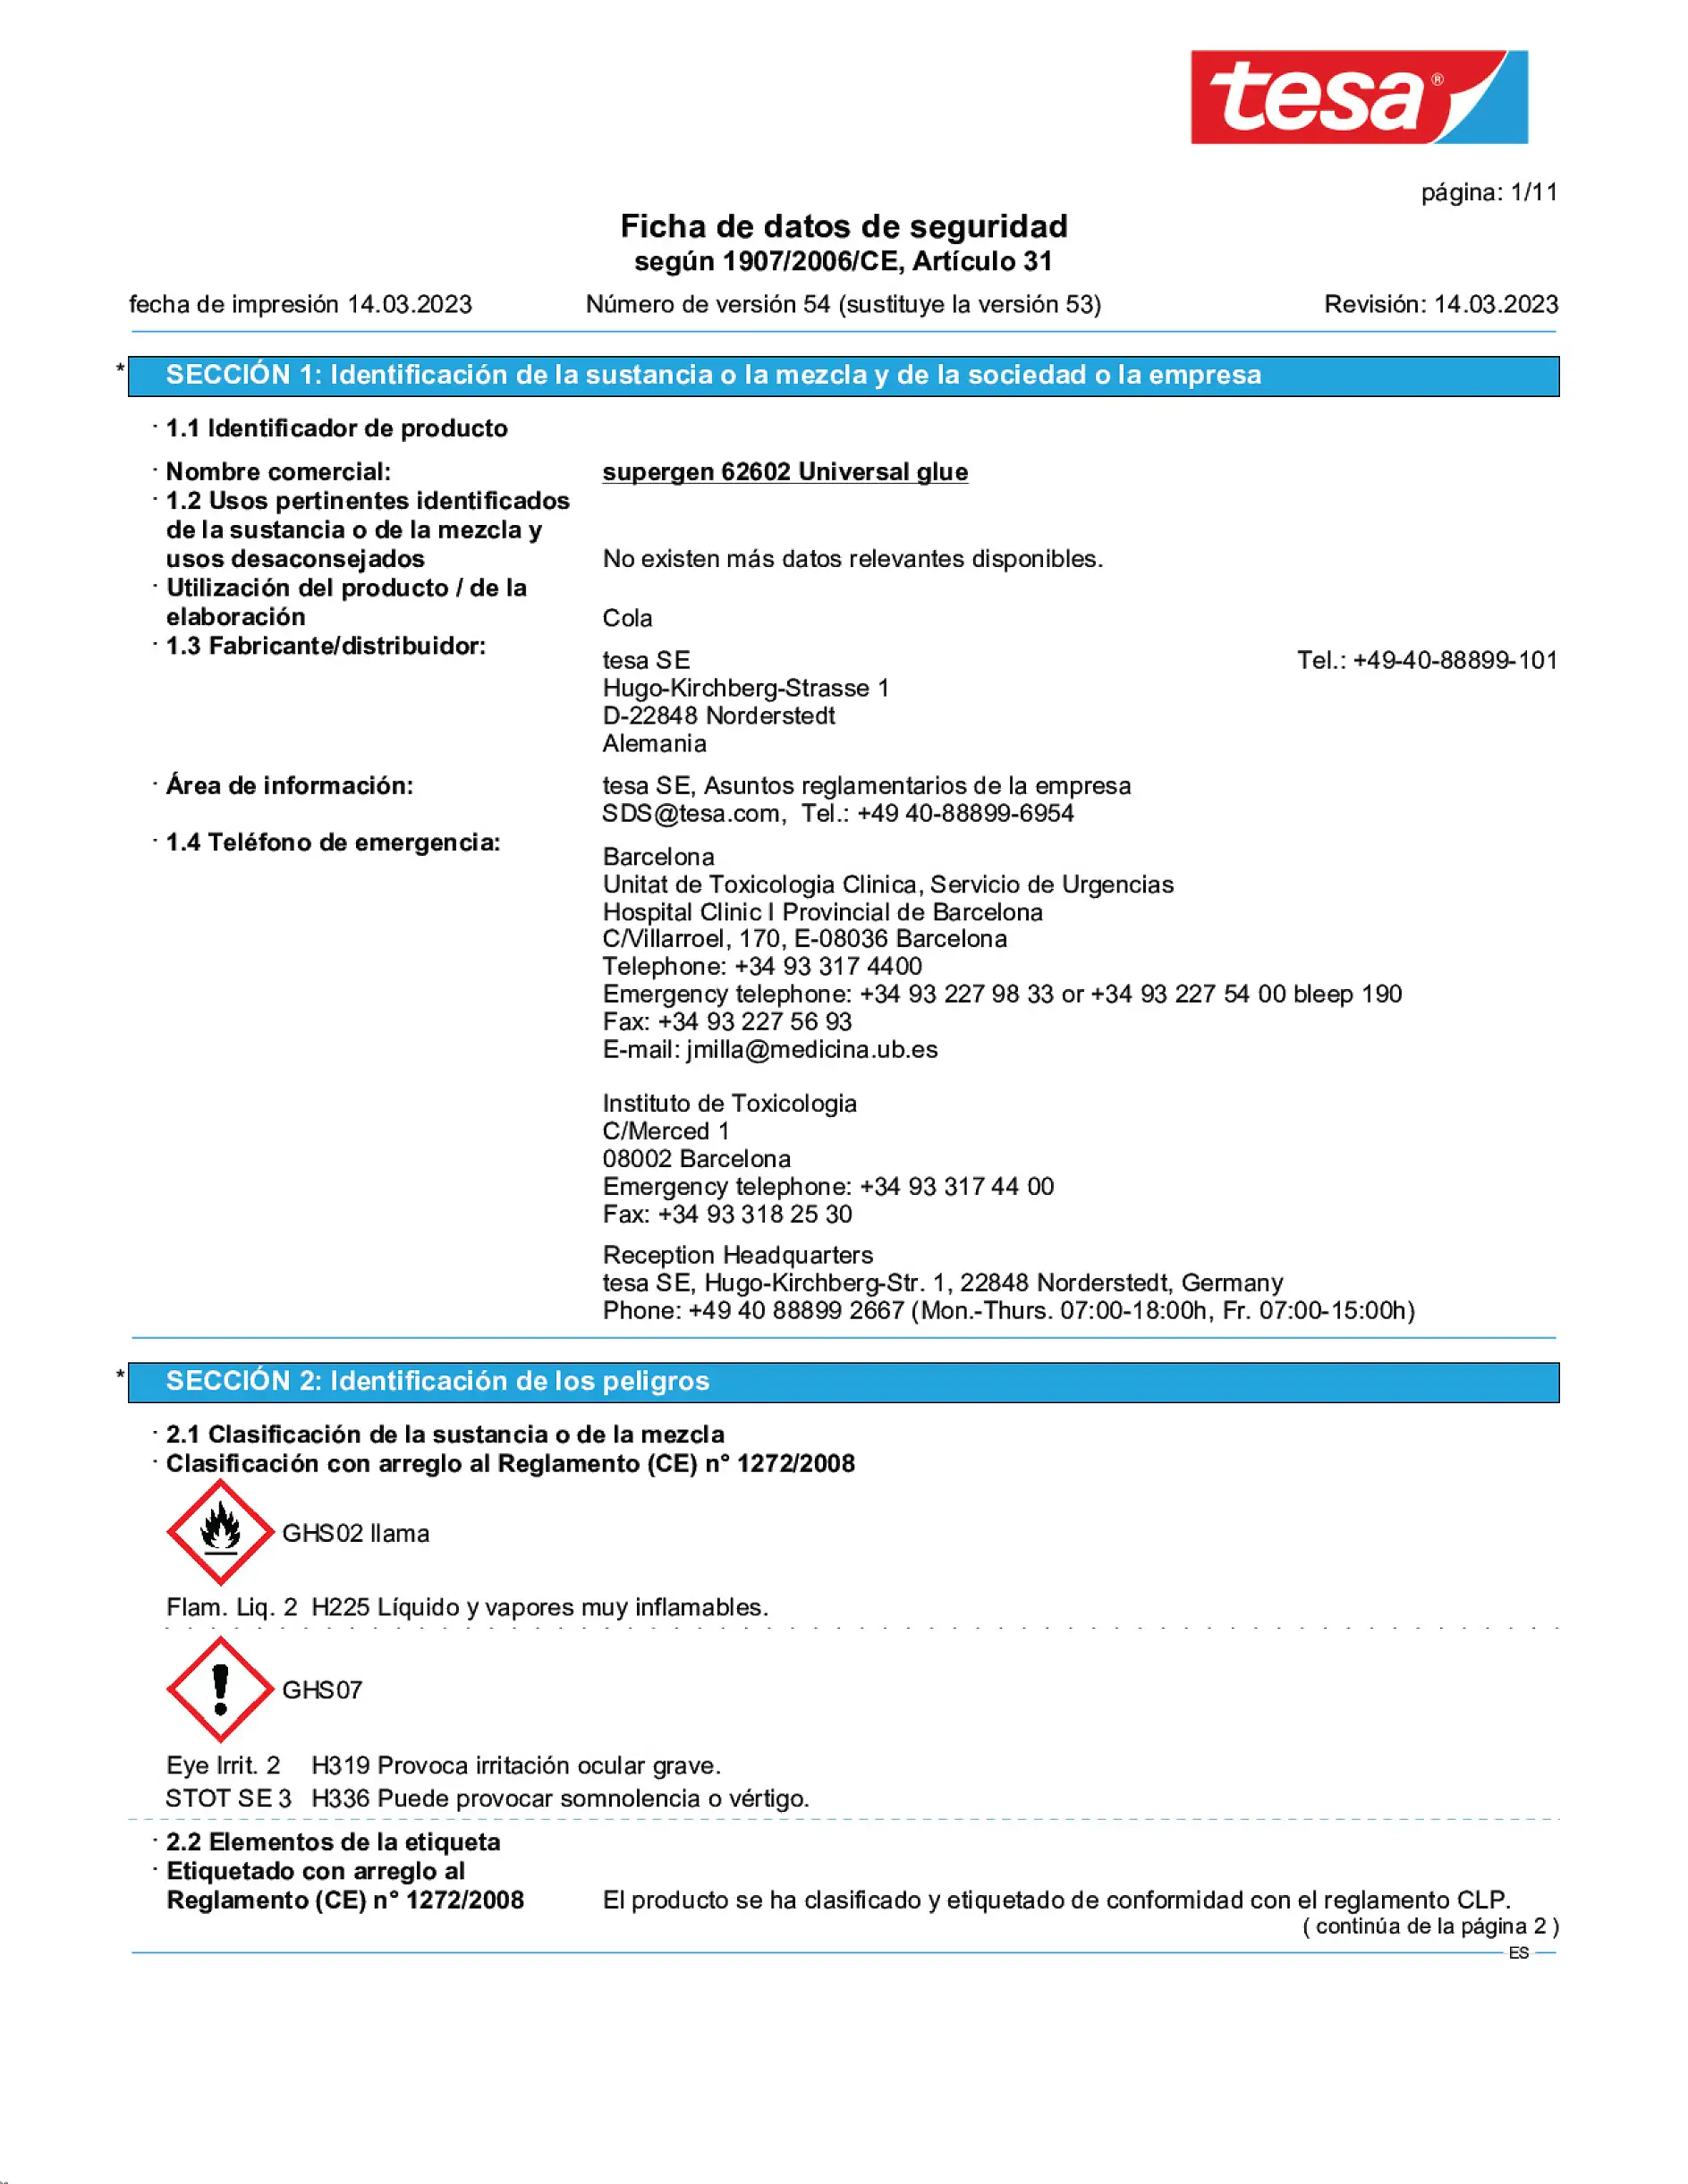 Safety data sheet_Supergen® 62602_es-ES_v54